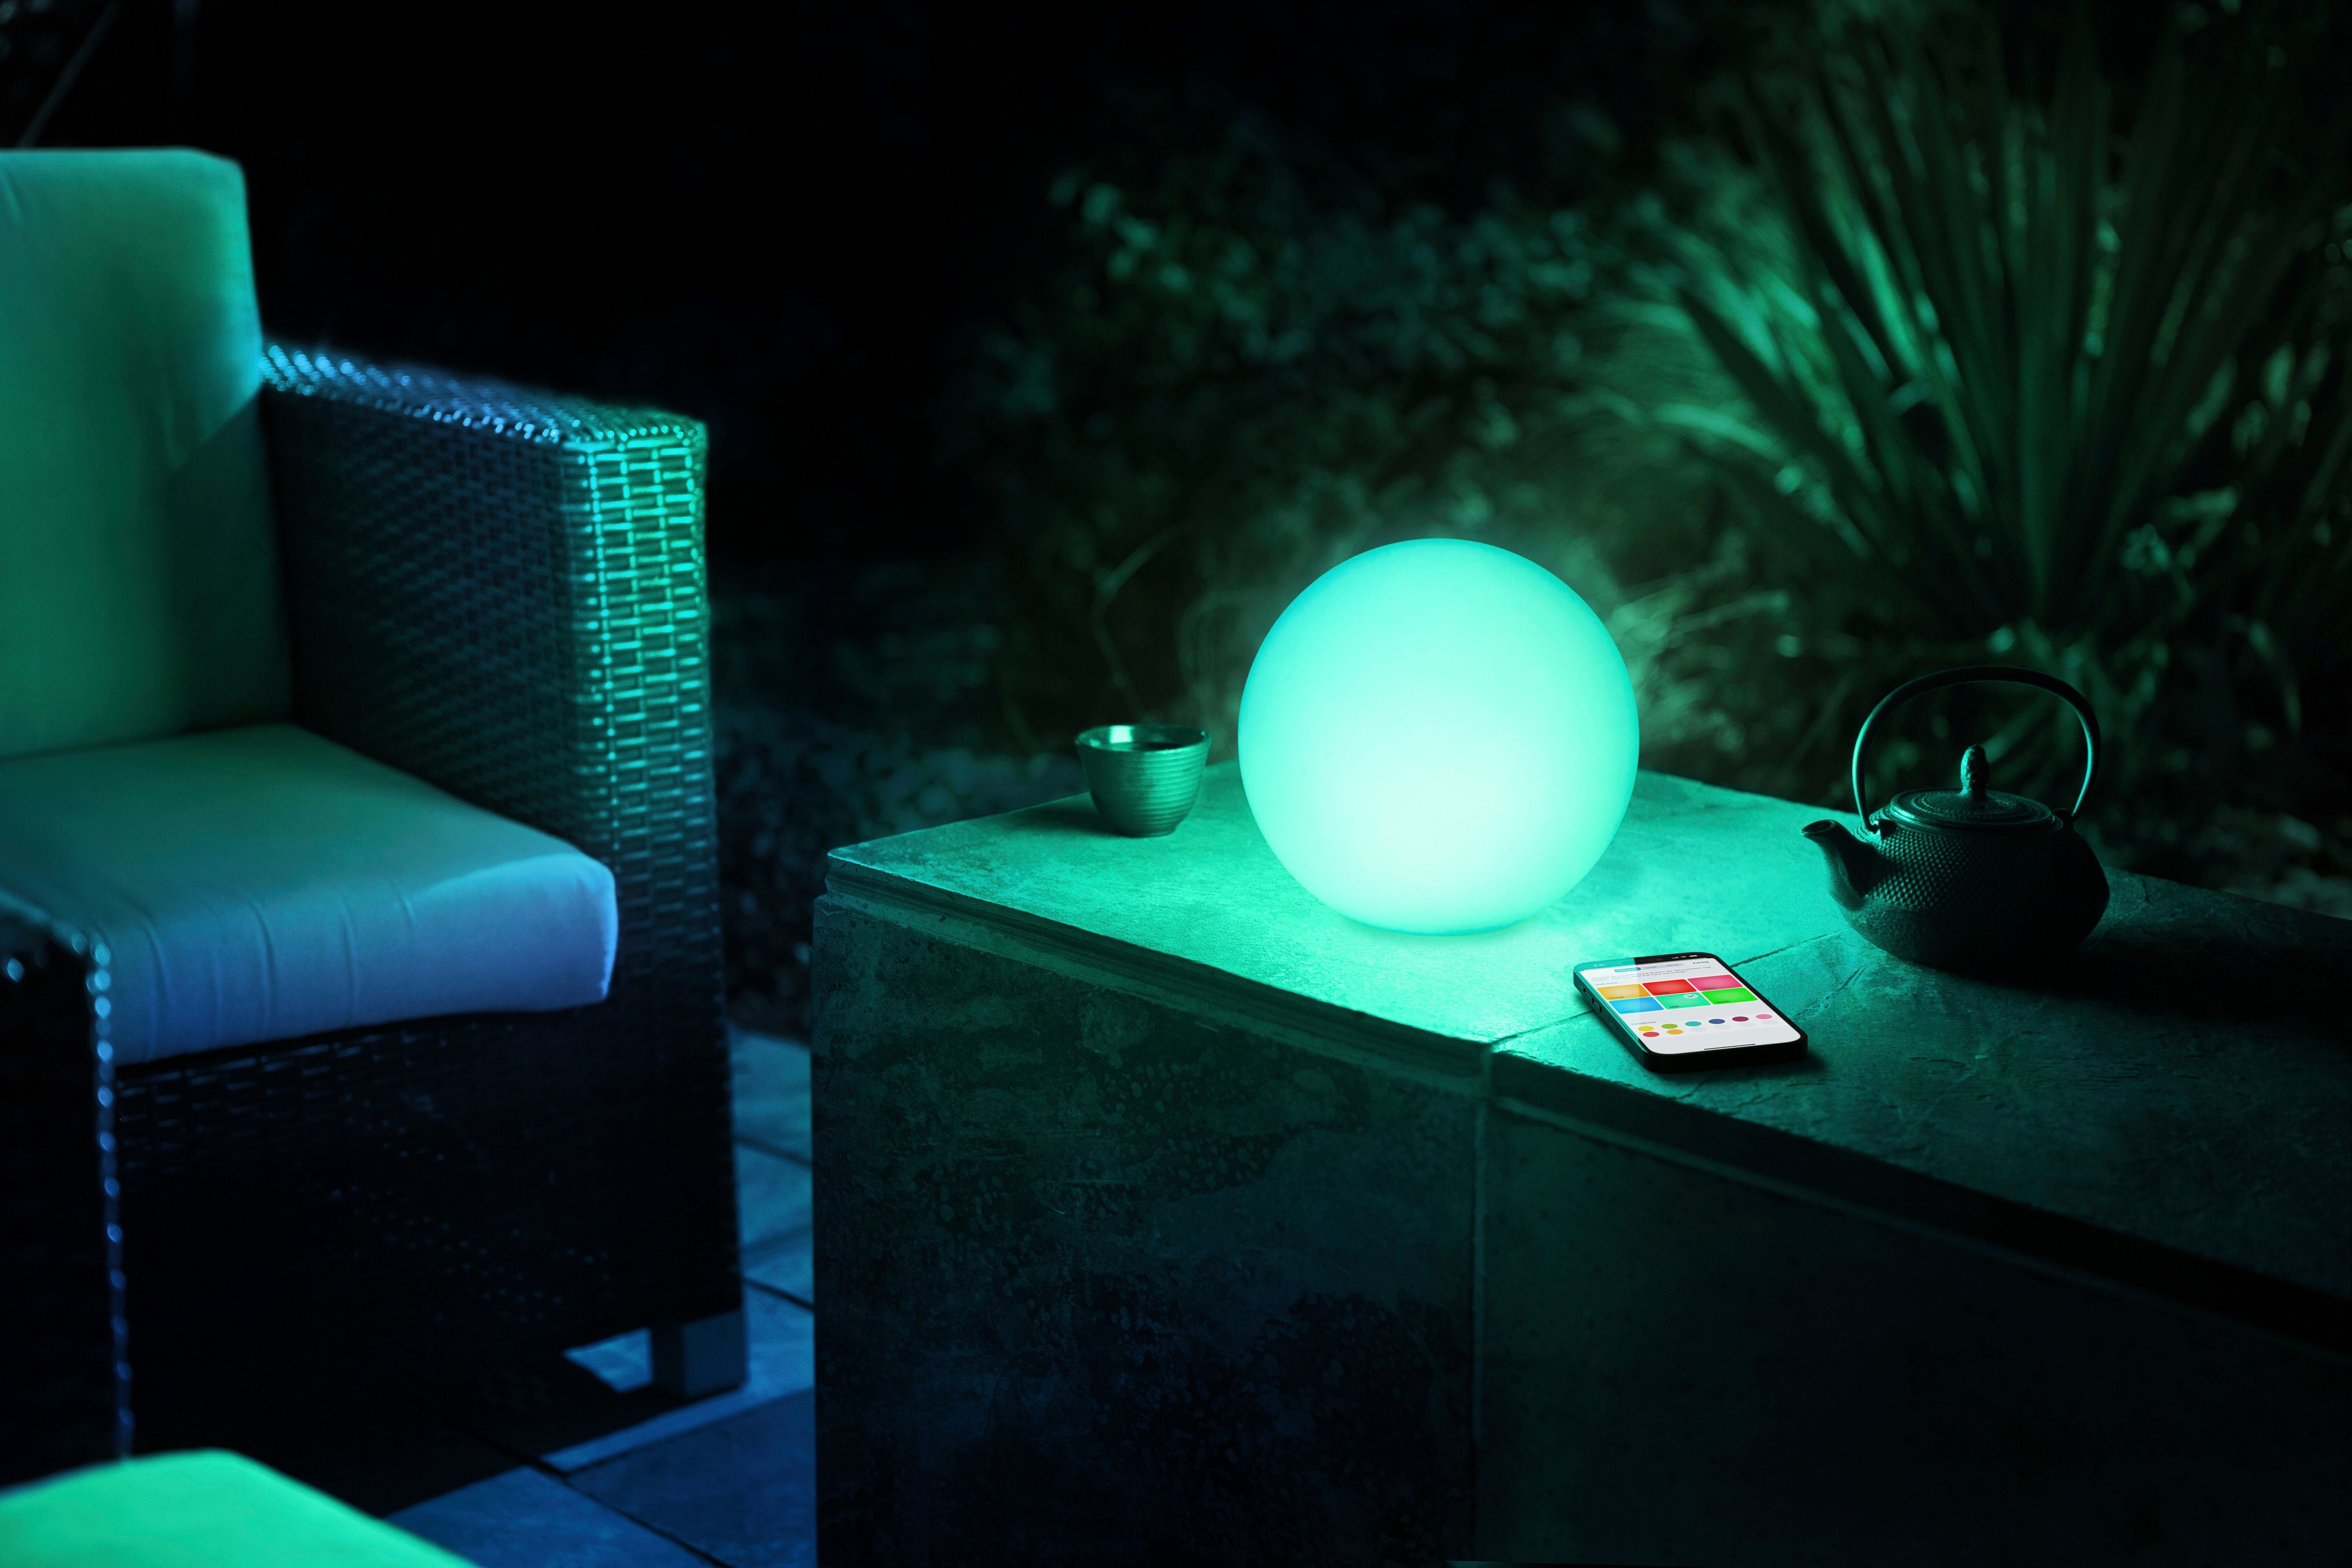 Bluetooth, fest Smarte EVE integriert Smart LED Home, LED-Leuchte Flare 20EBV9901,